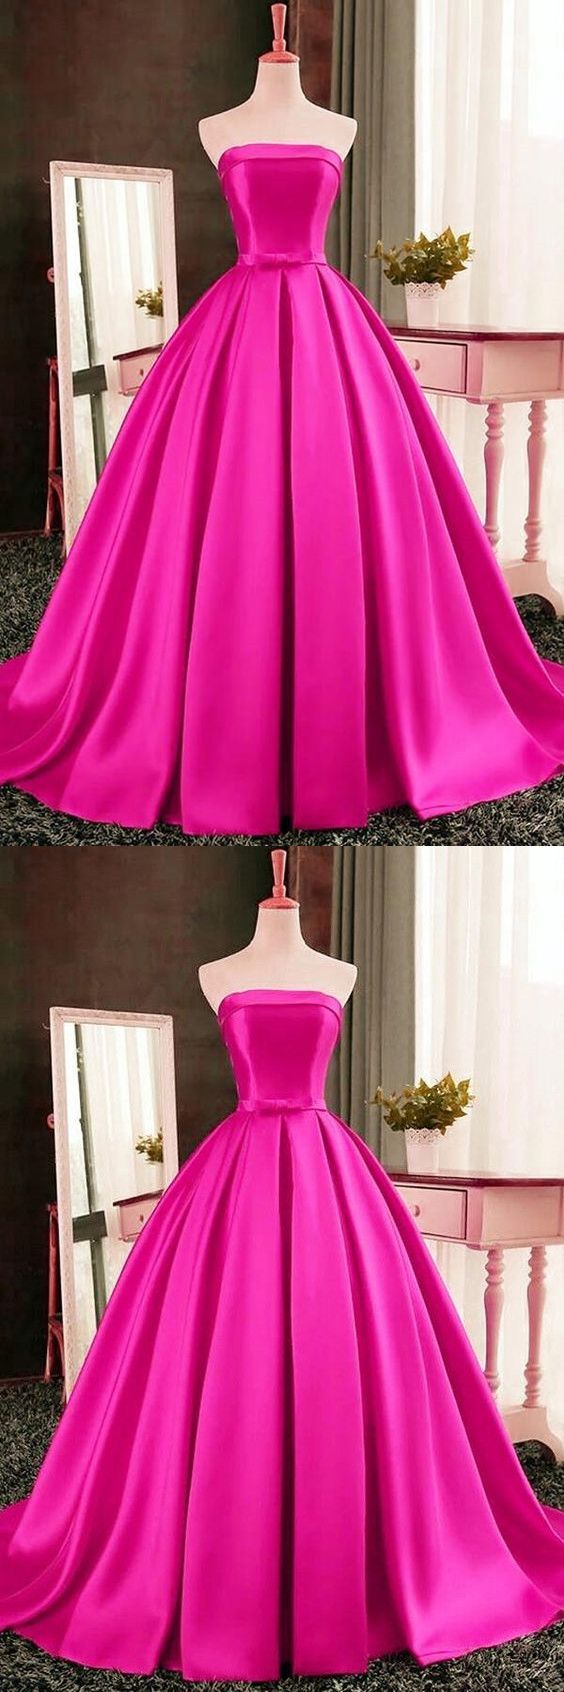 ball gown prom dresses,winter formal dress,pink quinceanera dress,satin ball gown cg4425